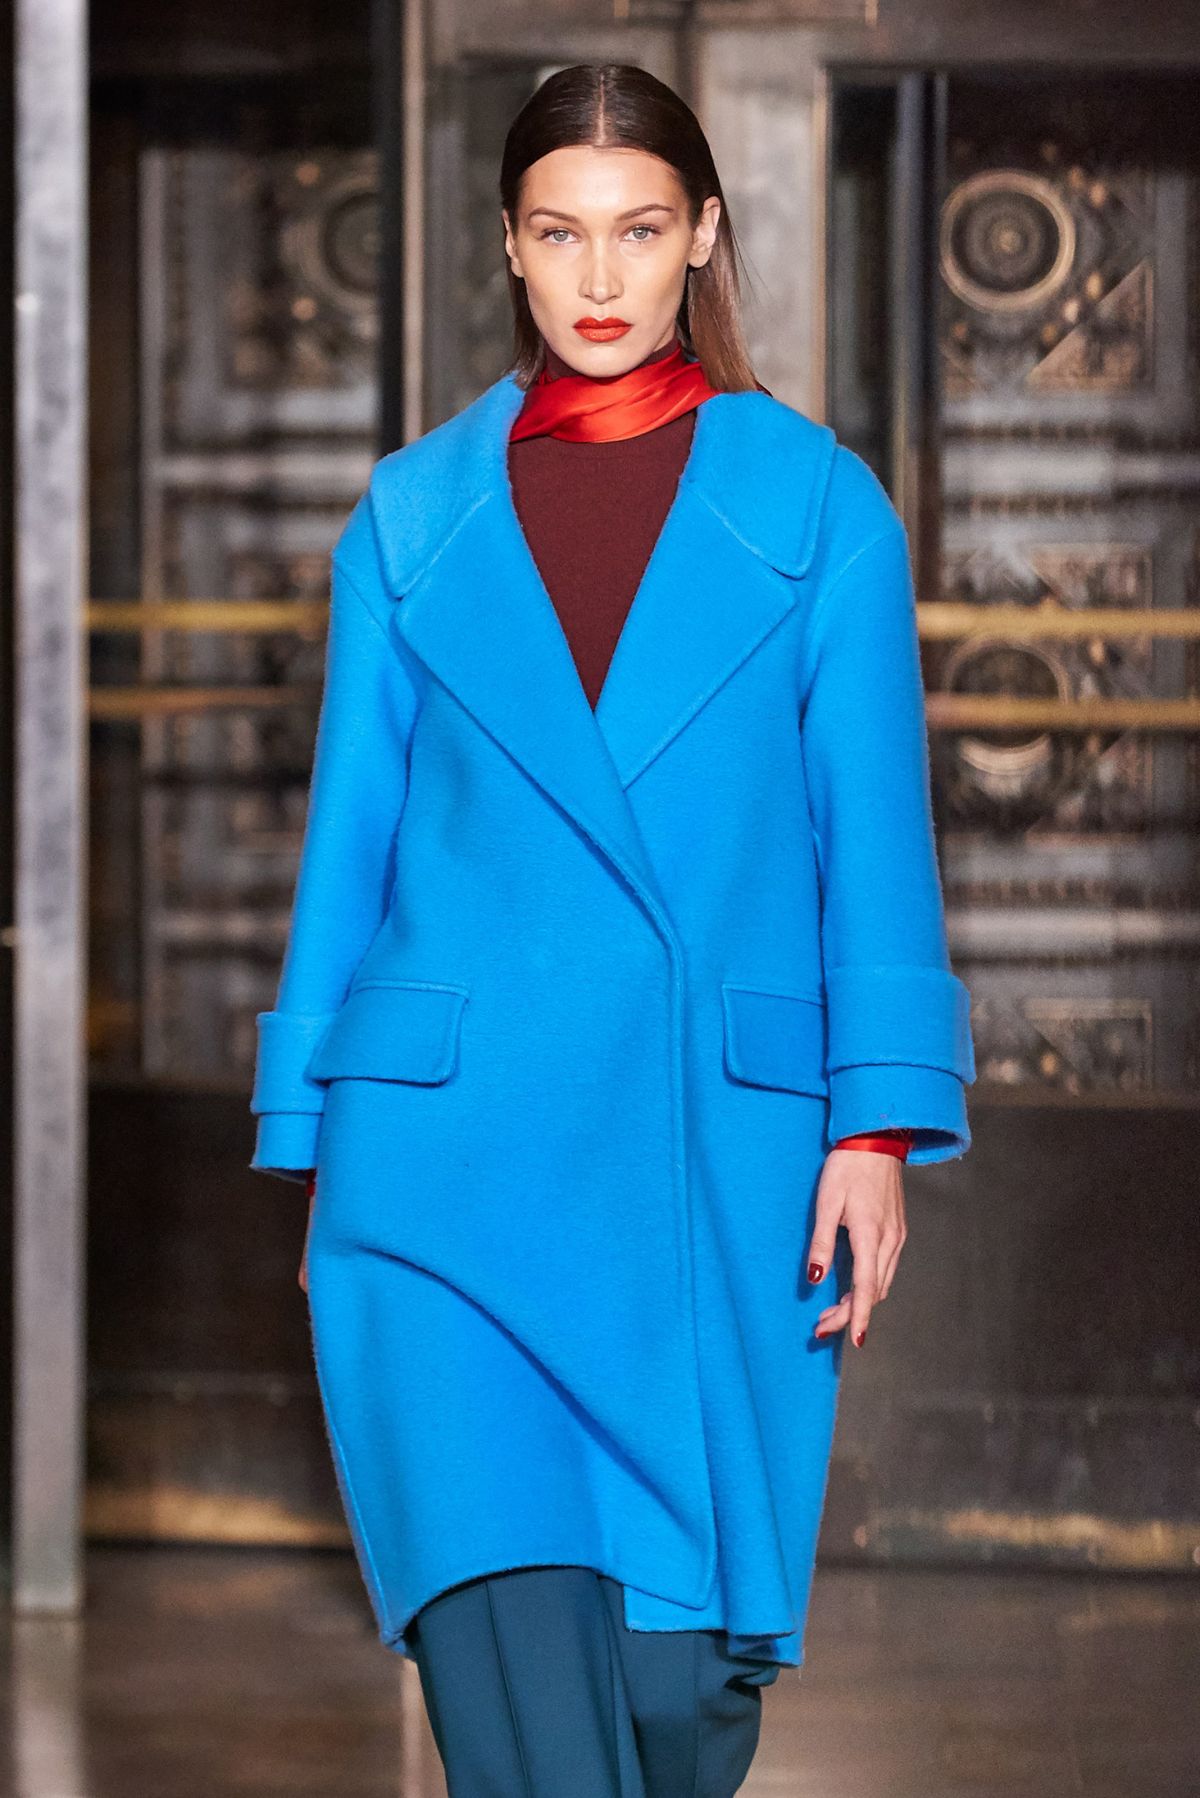 BELLA HADID at Oscar De La Renta Runway Show at New York Fashion Week ...